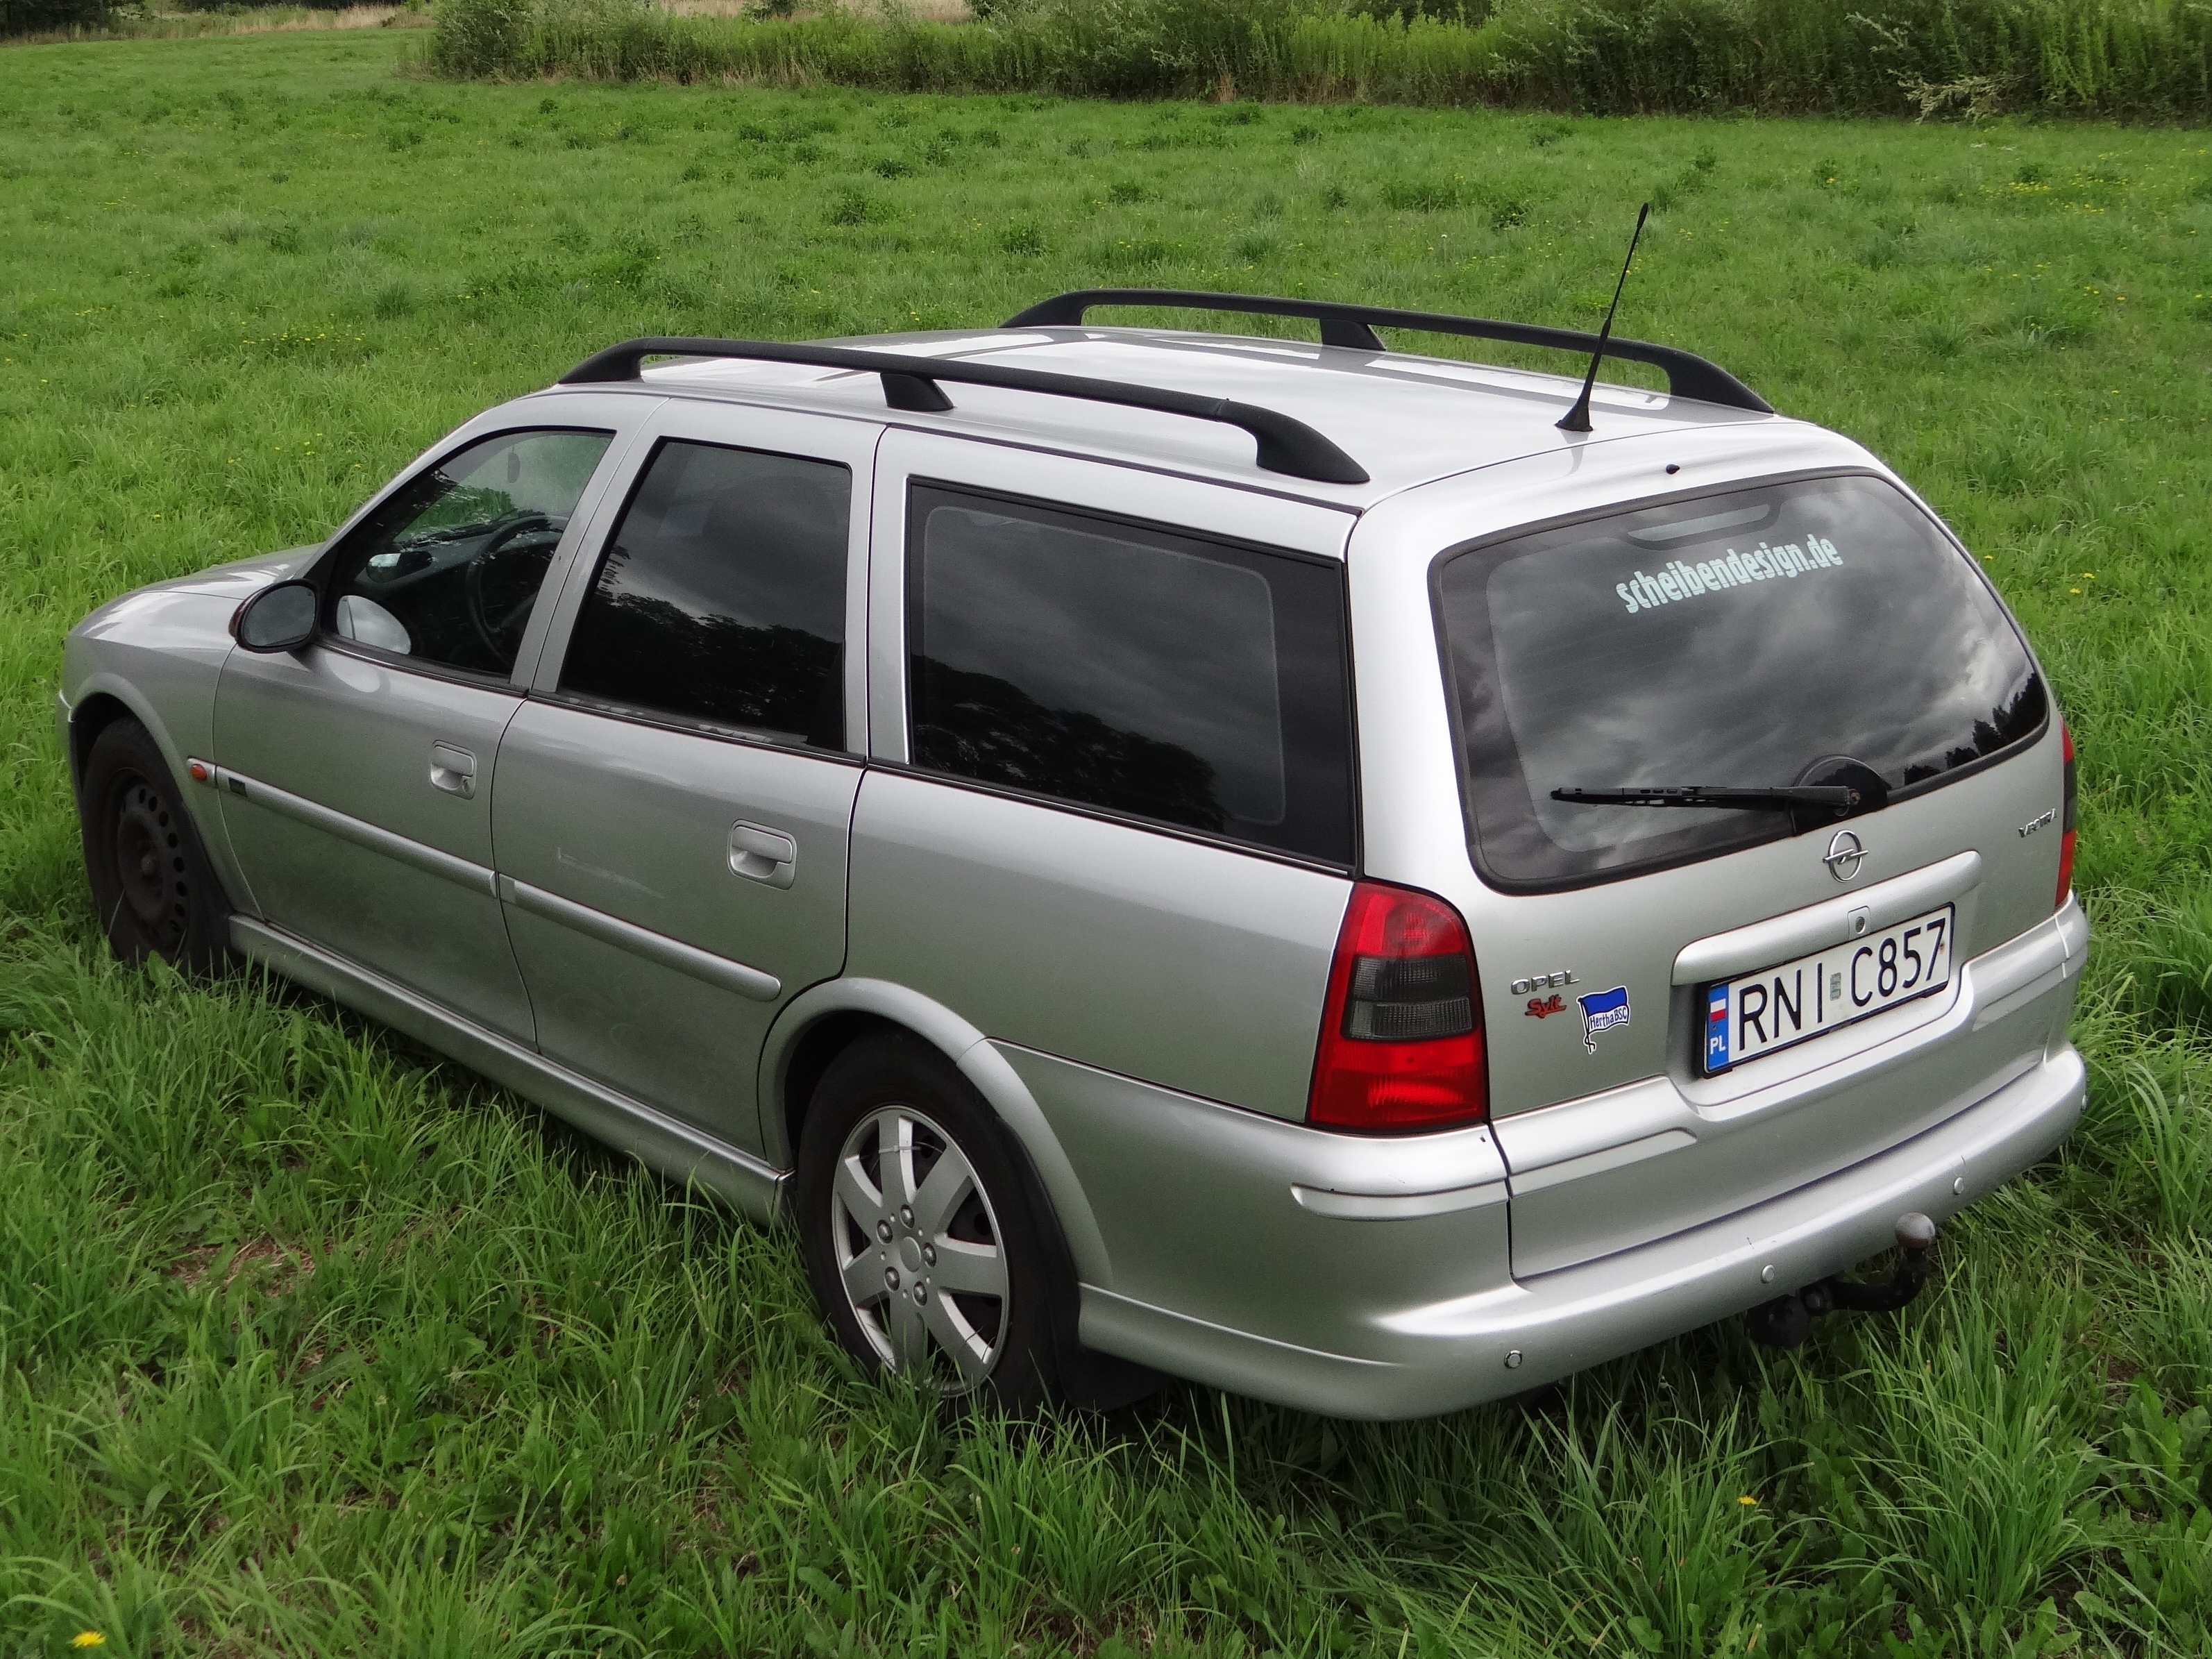 https://upload.wikimedia.org/wikipedia/commons/c/c6/Opel_Vectra_B_Caravan_1.6_Edition2000_%2810%29.jpg